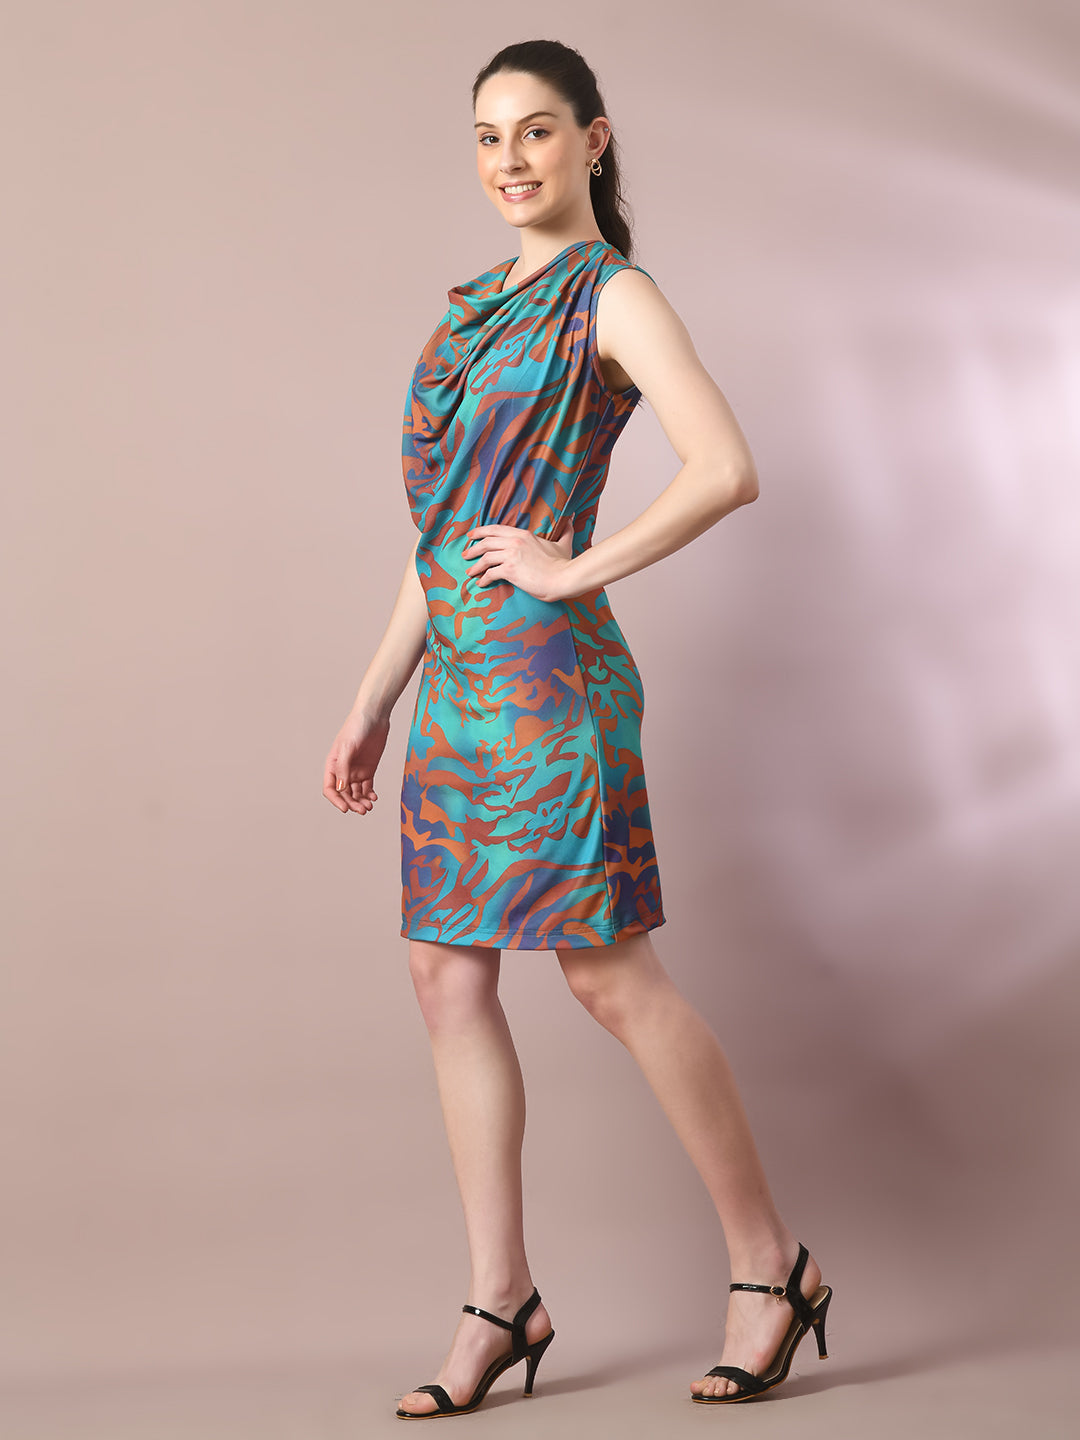 Women's  Multi Printed Cowl Neck Bodycon Party Dress  - Myshka